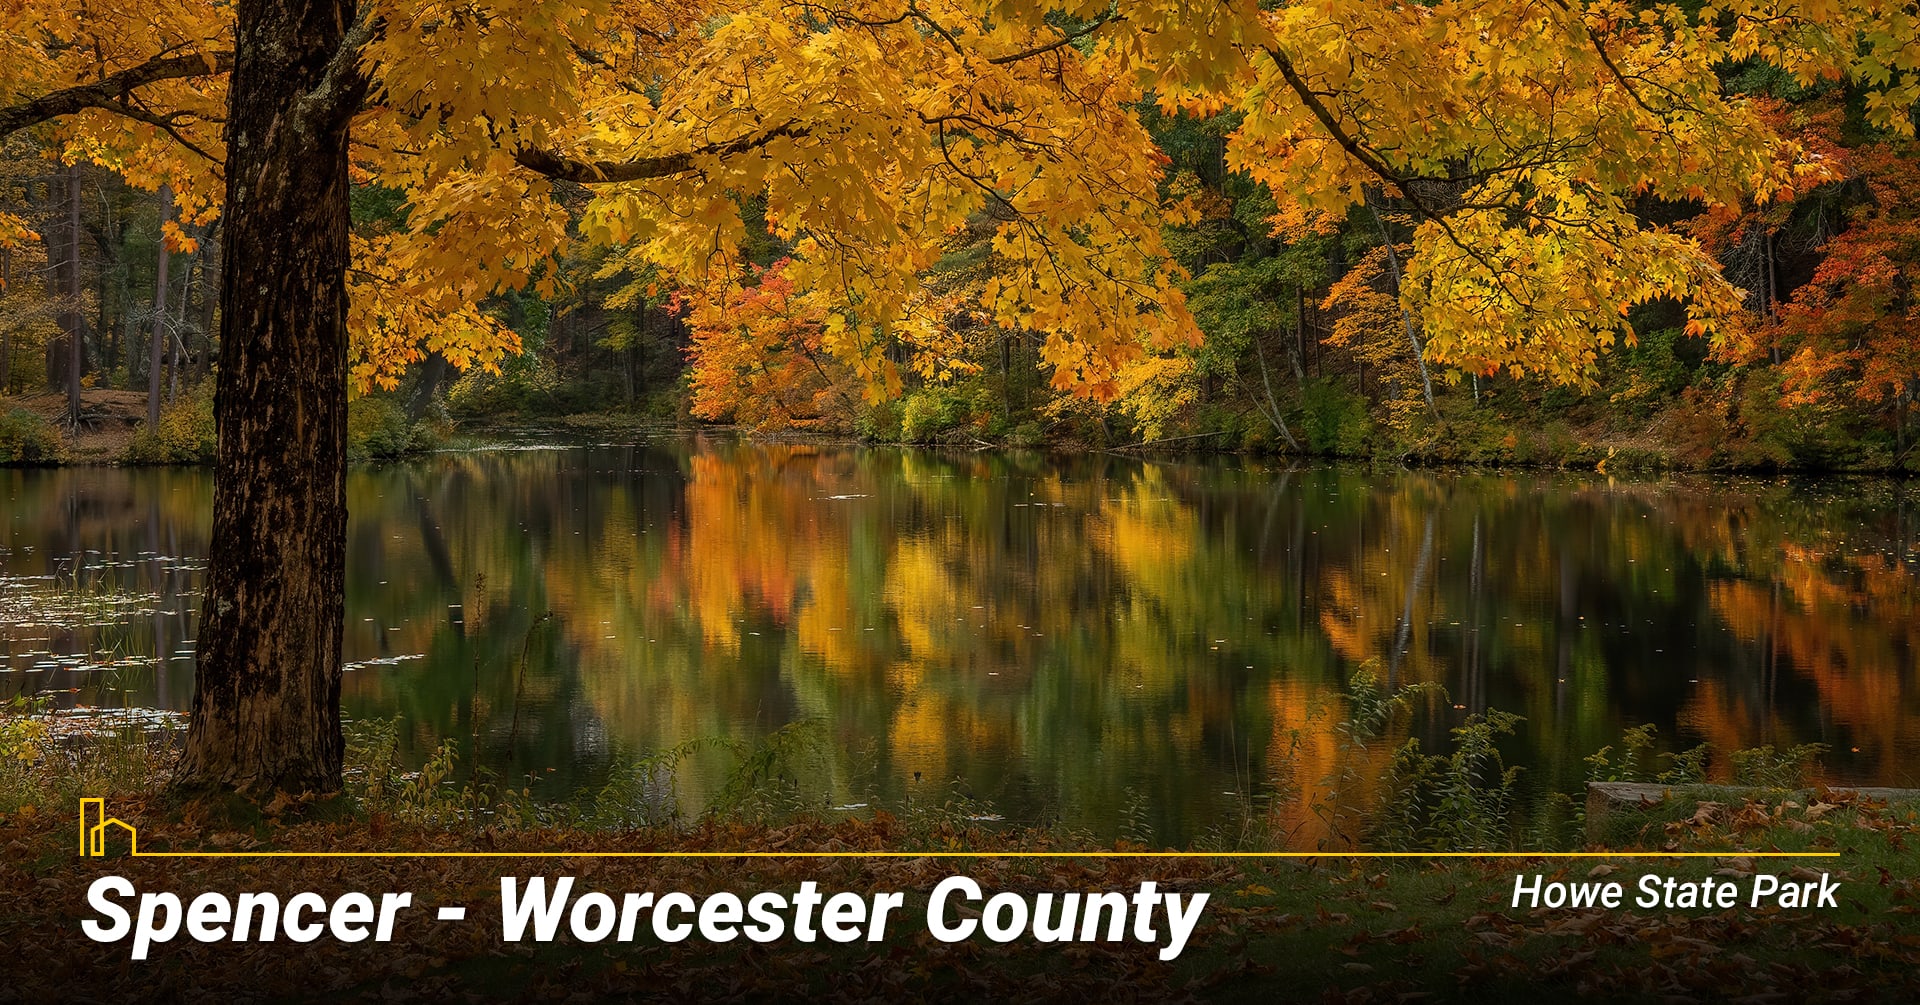 Spencer - Worcester County